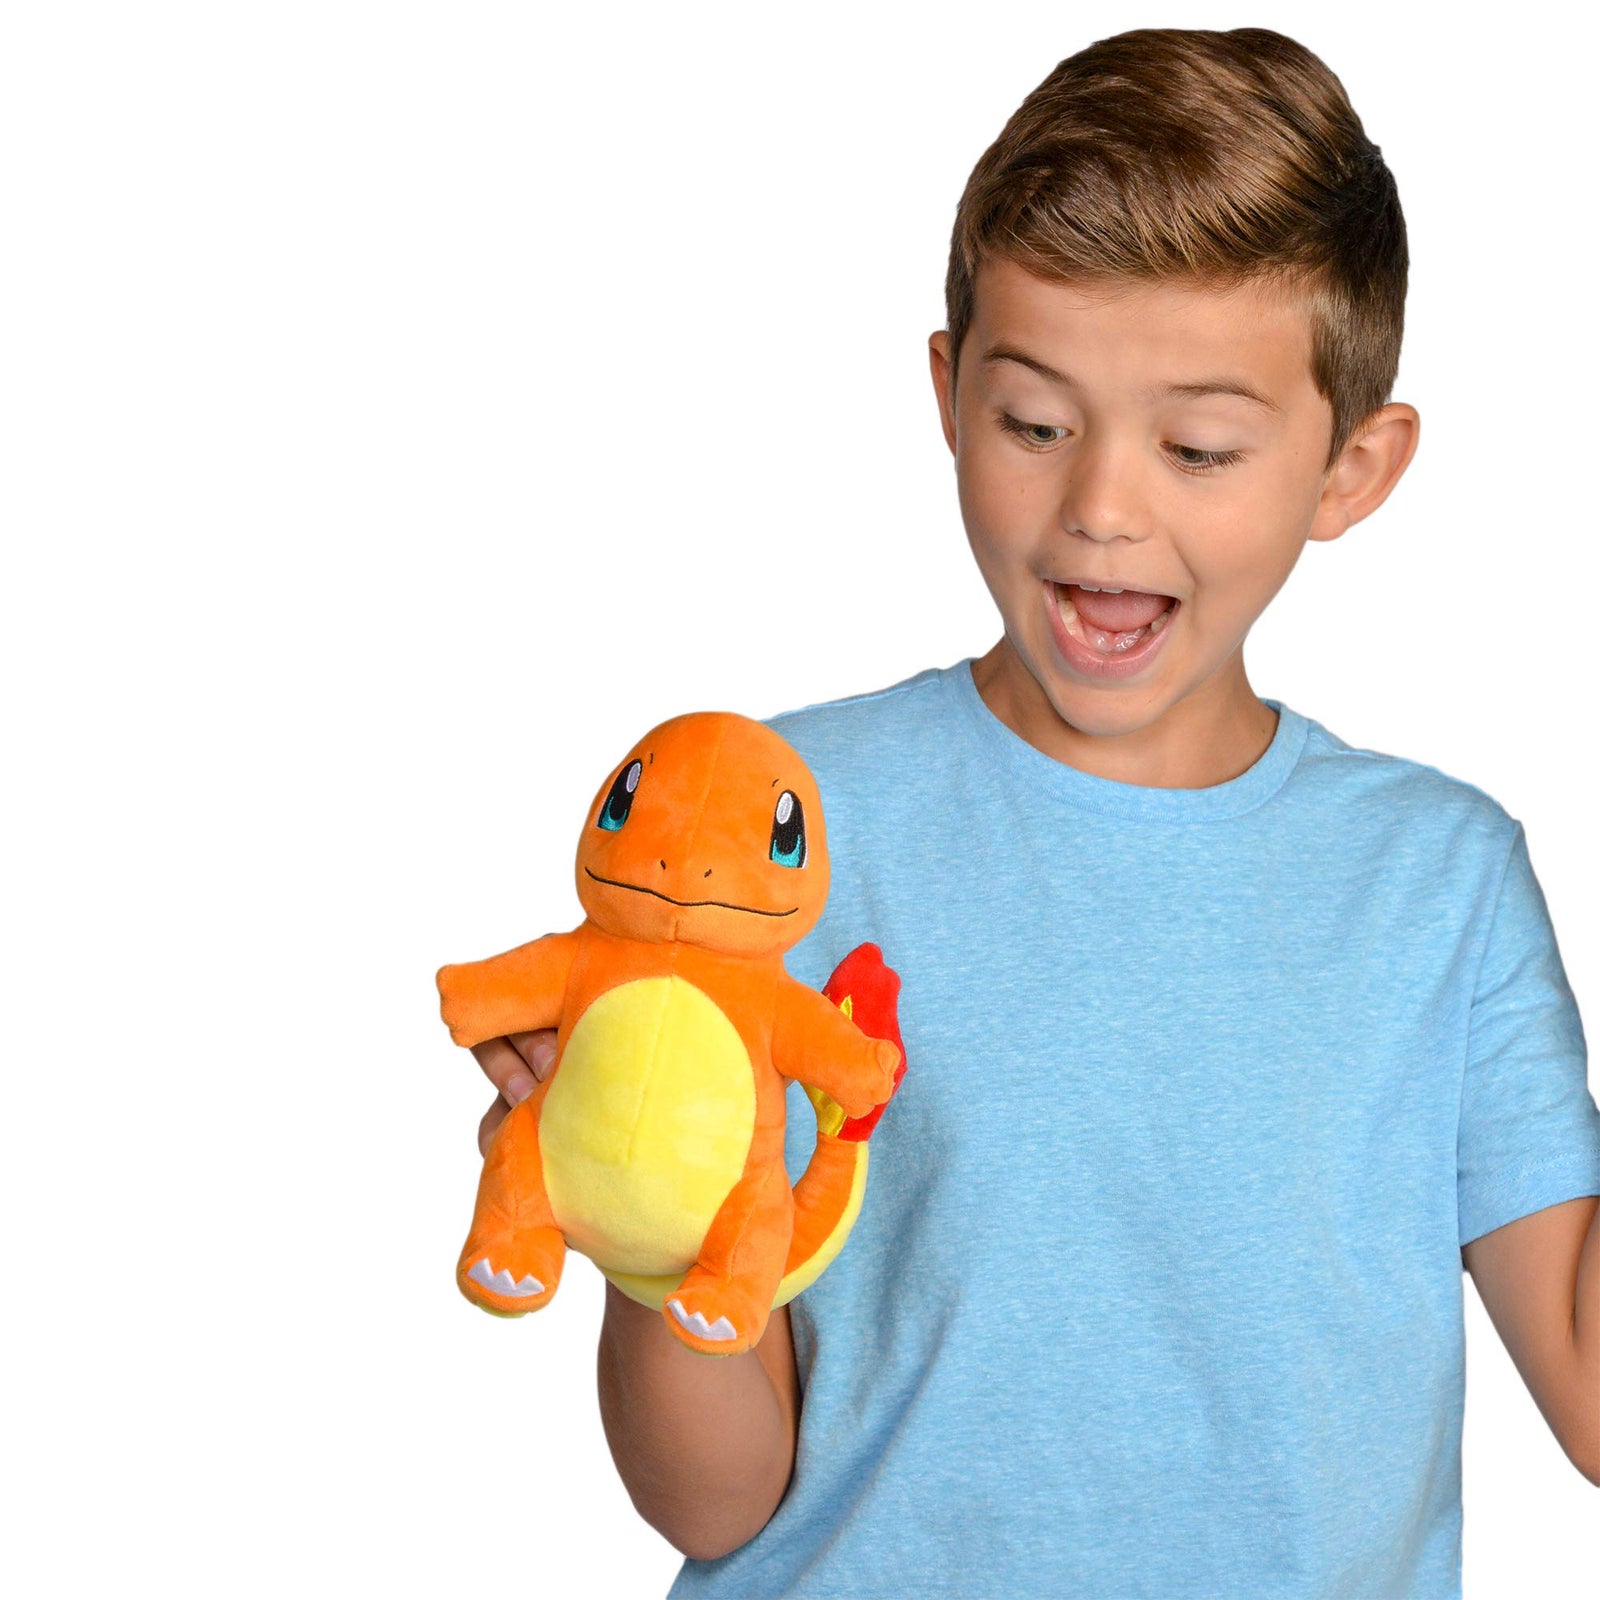 Pokémon Charmander Plush Stuffed Animal Toy - 8"